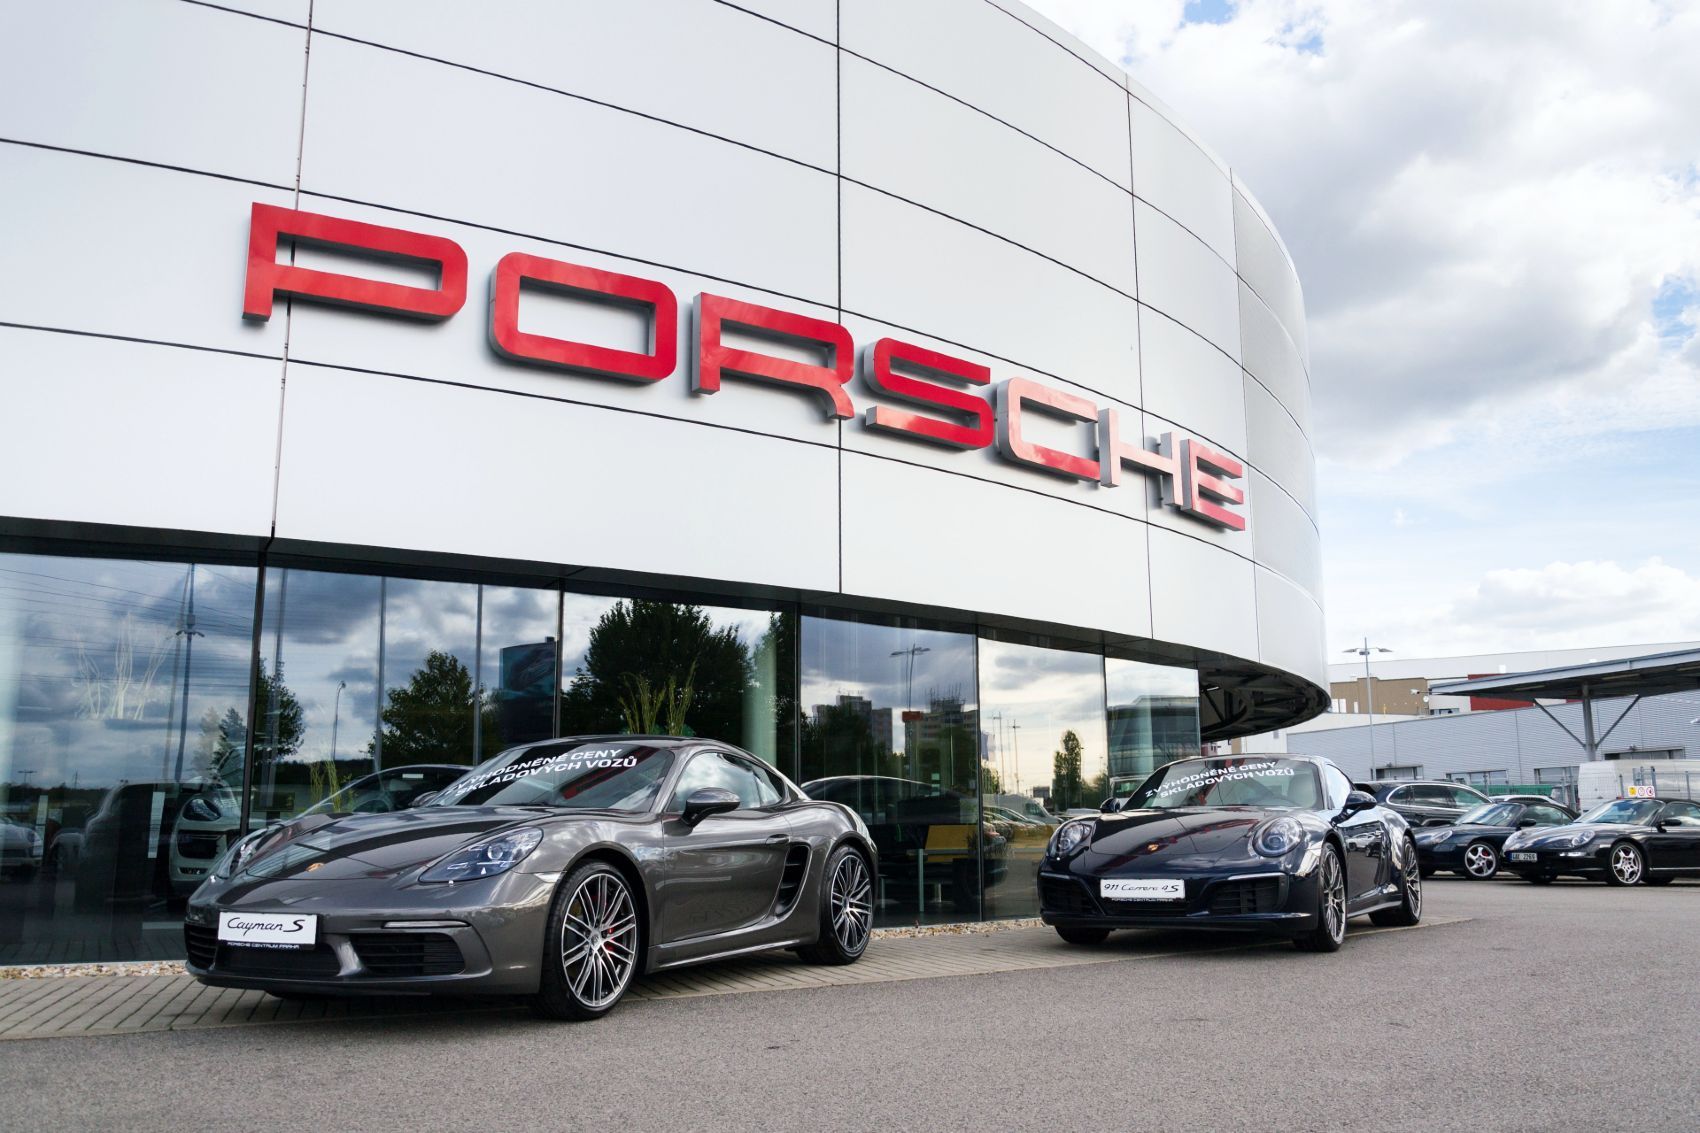 Porsche dealership under partly cloudy sky - porsche emissions